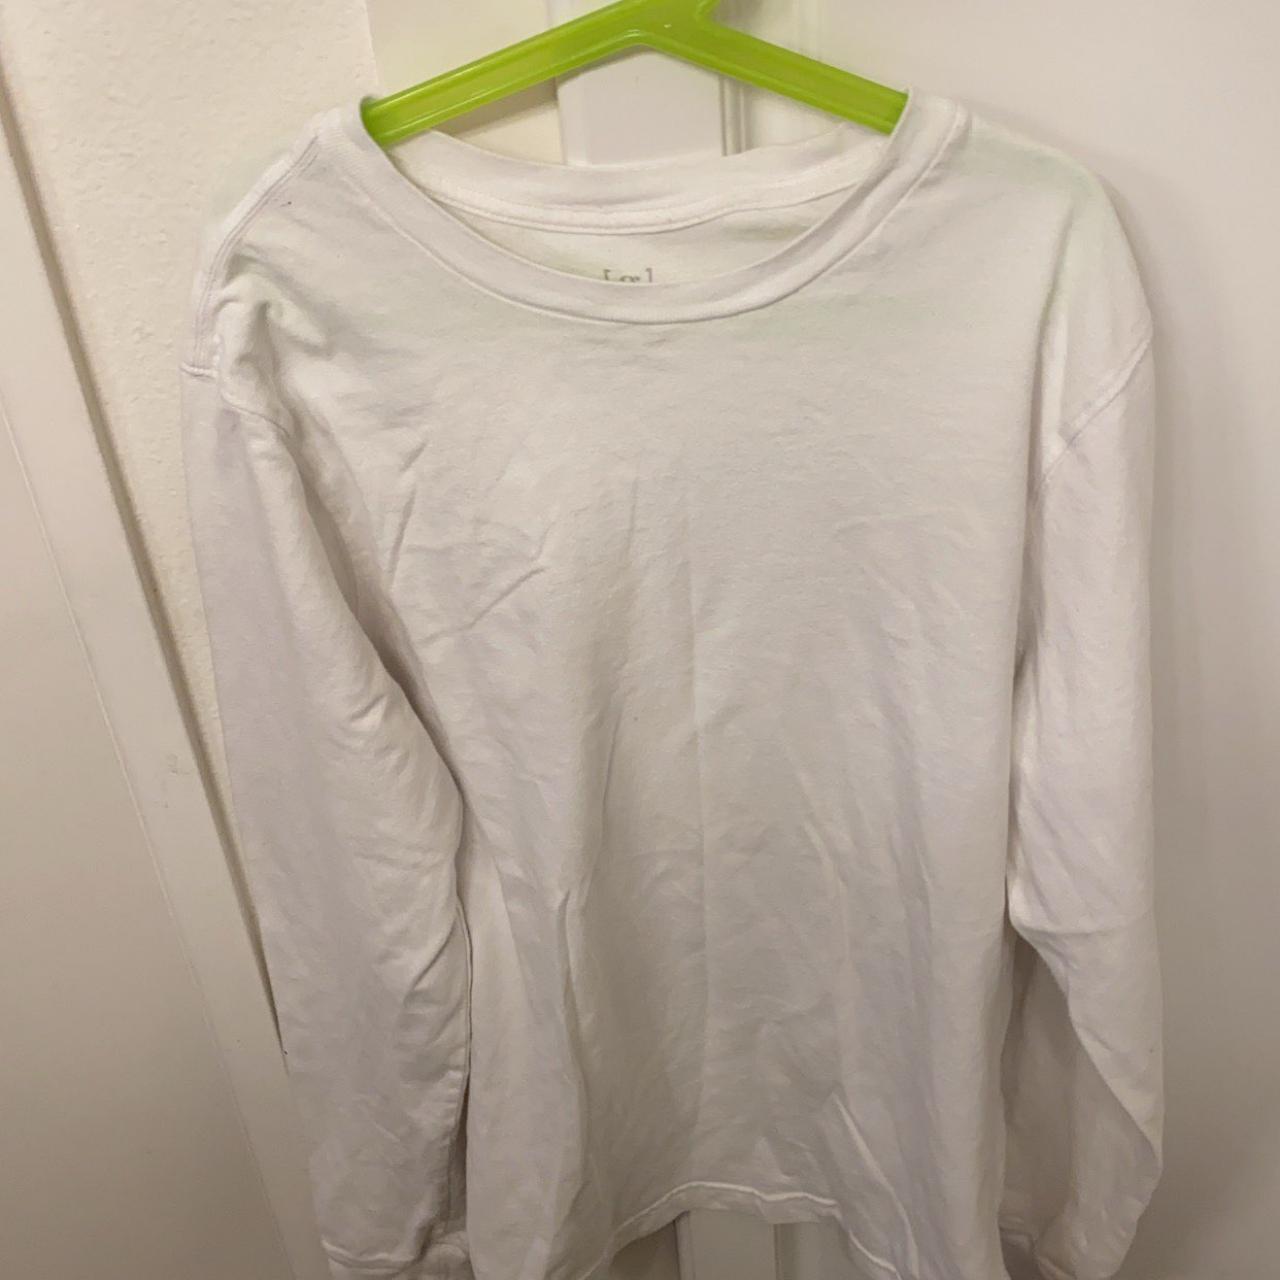 white undershirt - Depop